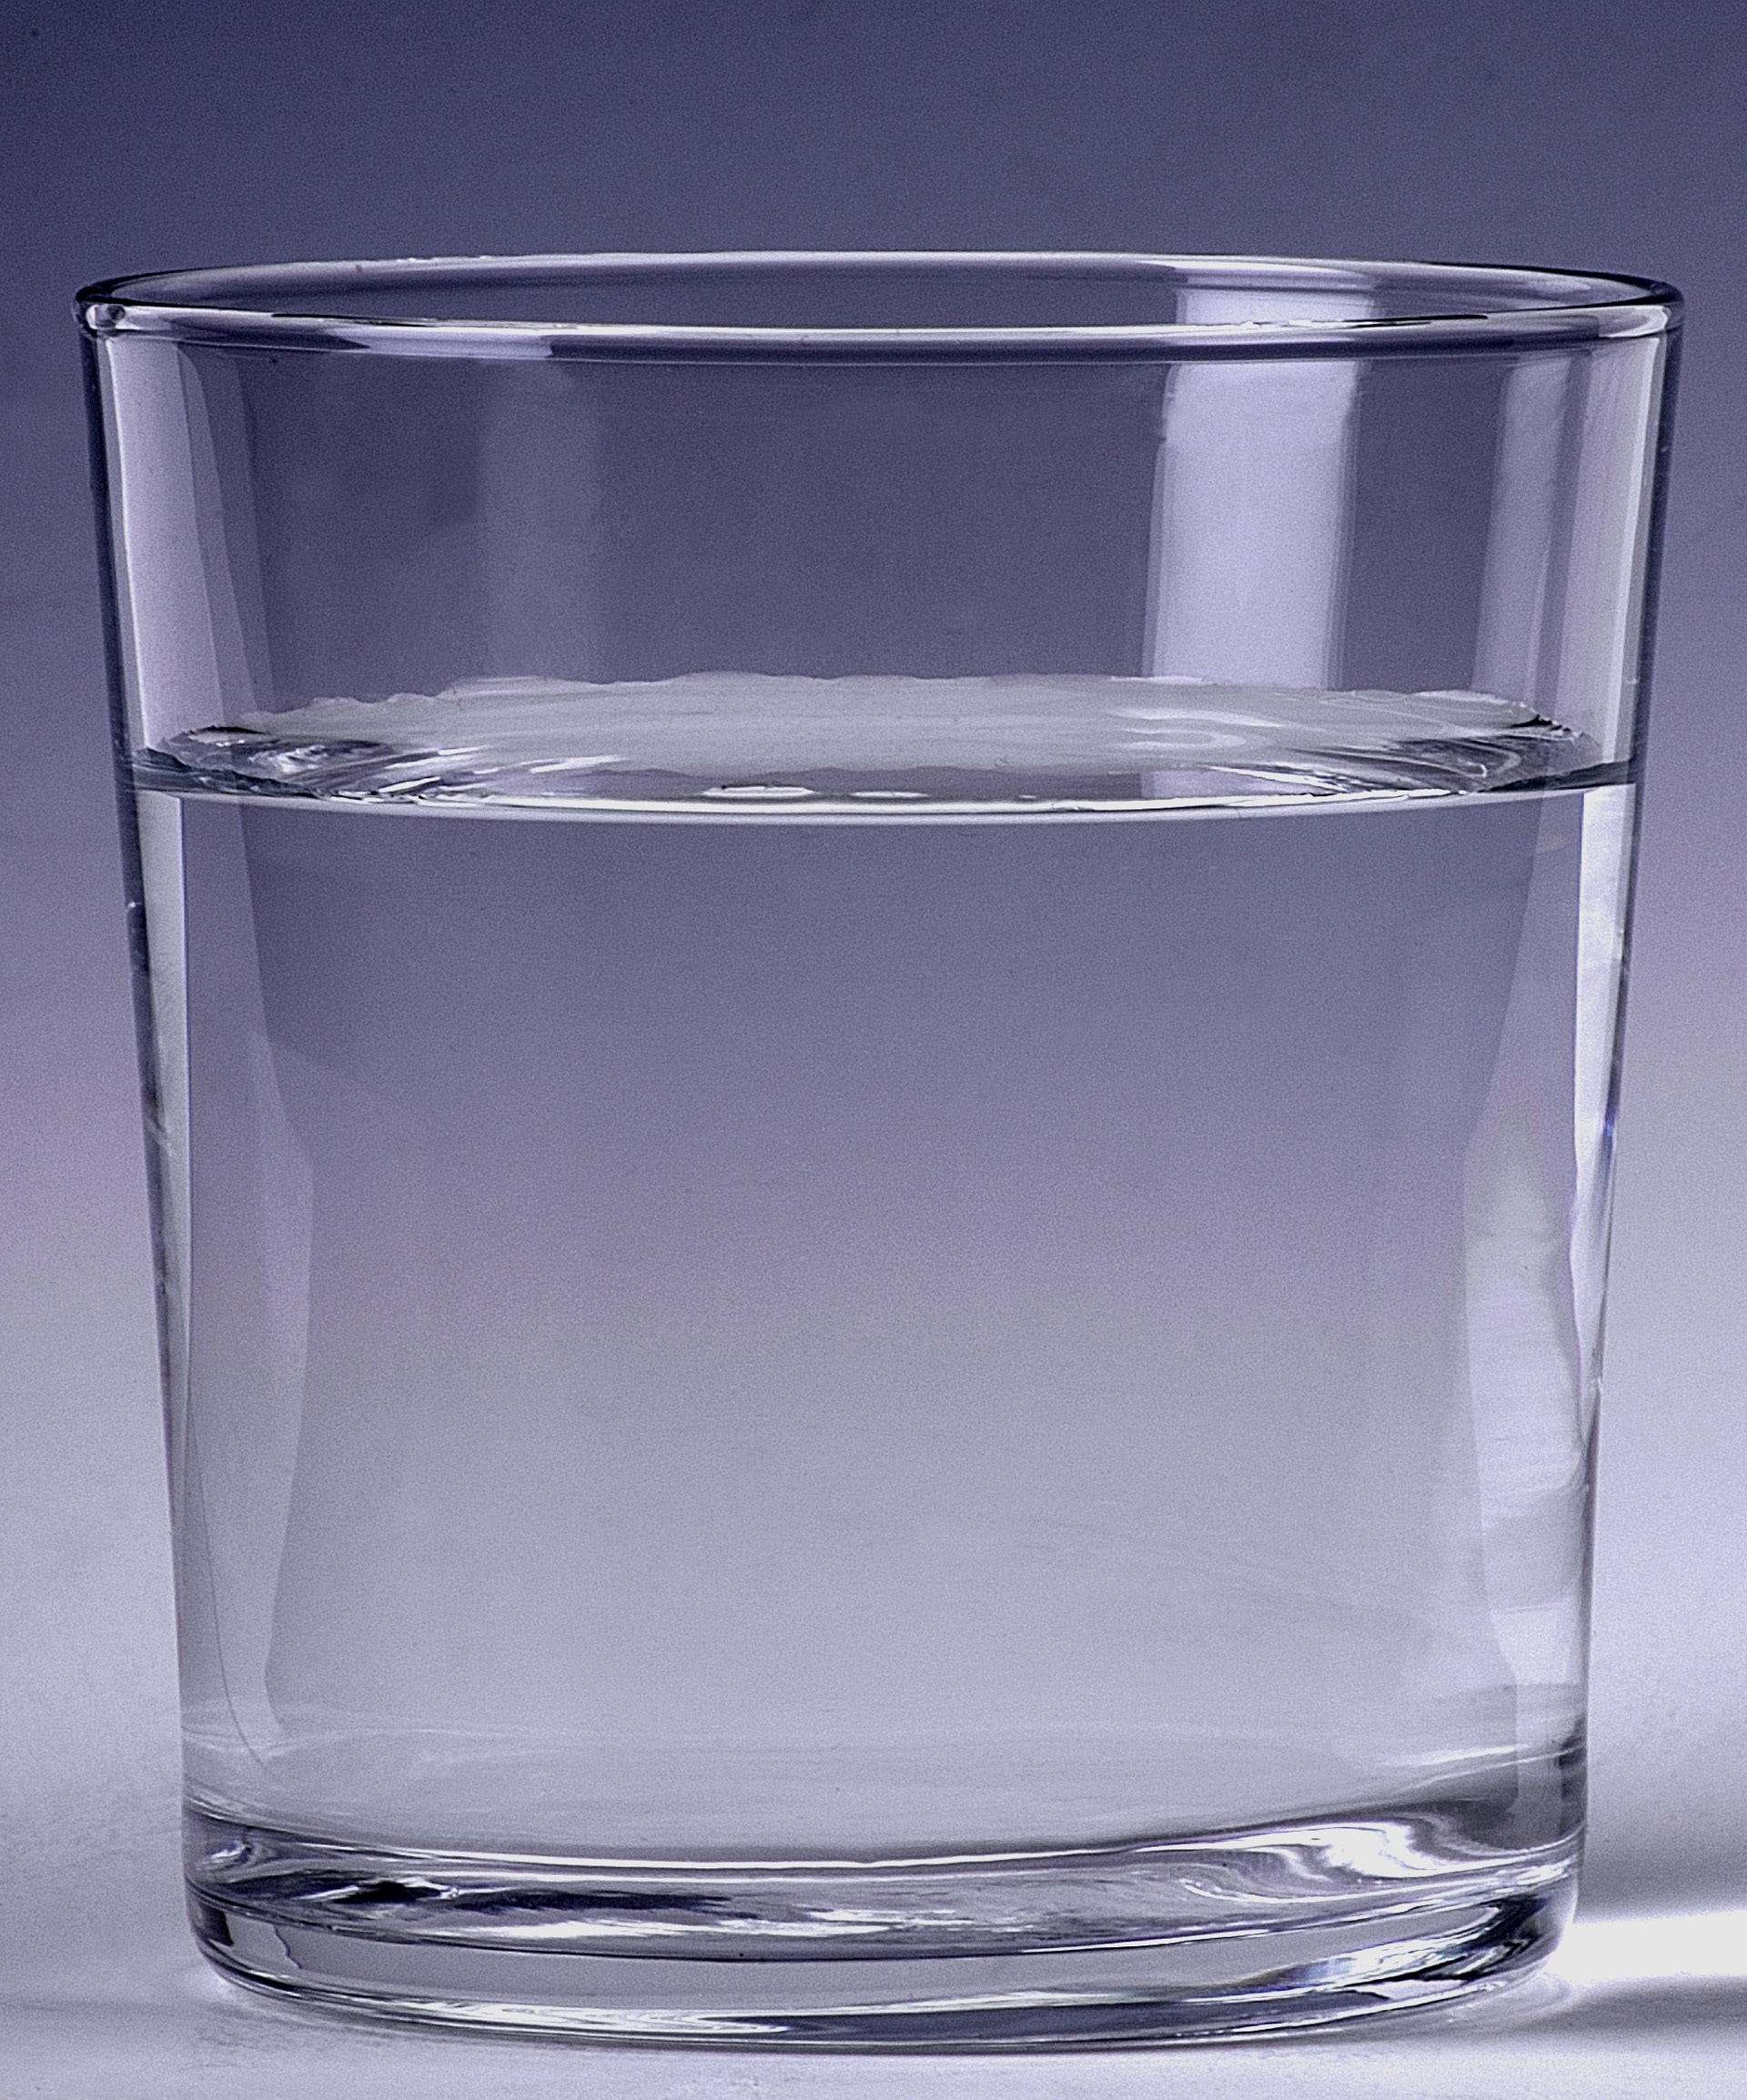 Налей полстакана воды. Стакан воды. Прозрачная жидкость. Прозрачный стакан. Стакан стеклянный.